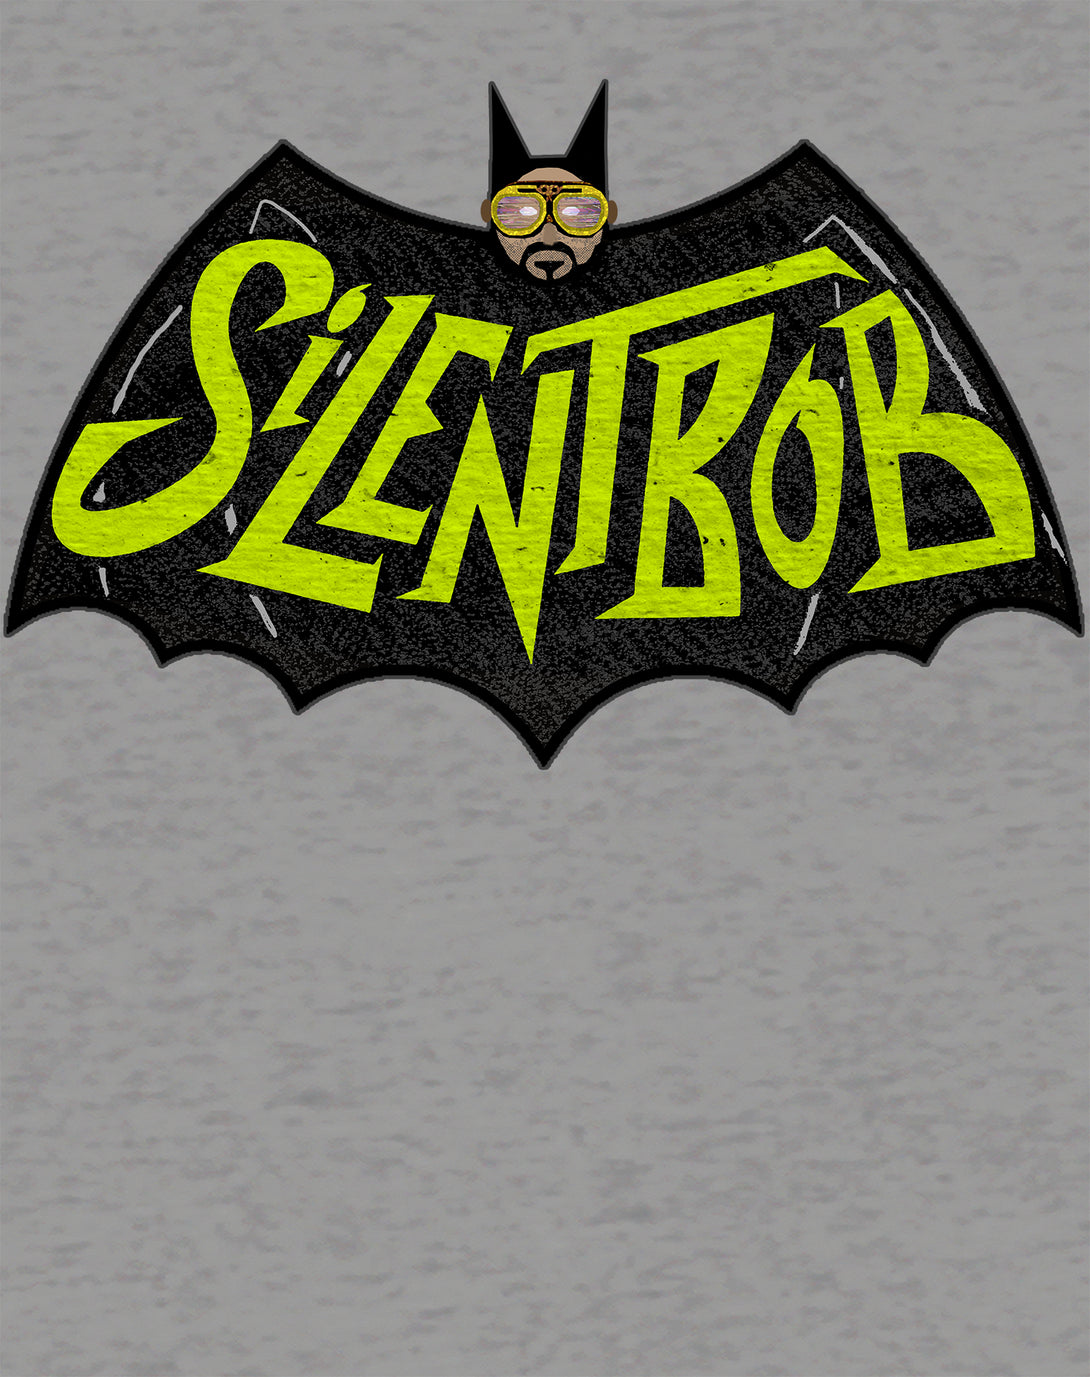 Kevin Smith View Askewniverse Logo Silent Bat Bob Official Sweatshirt Sports Grey - Urban Species Design Close Up